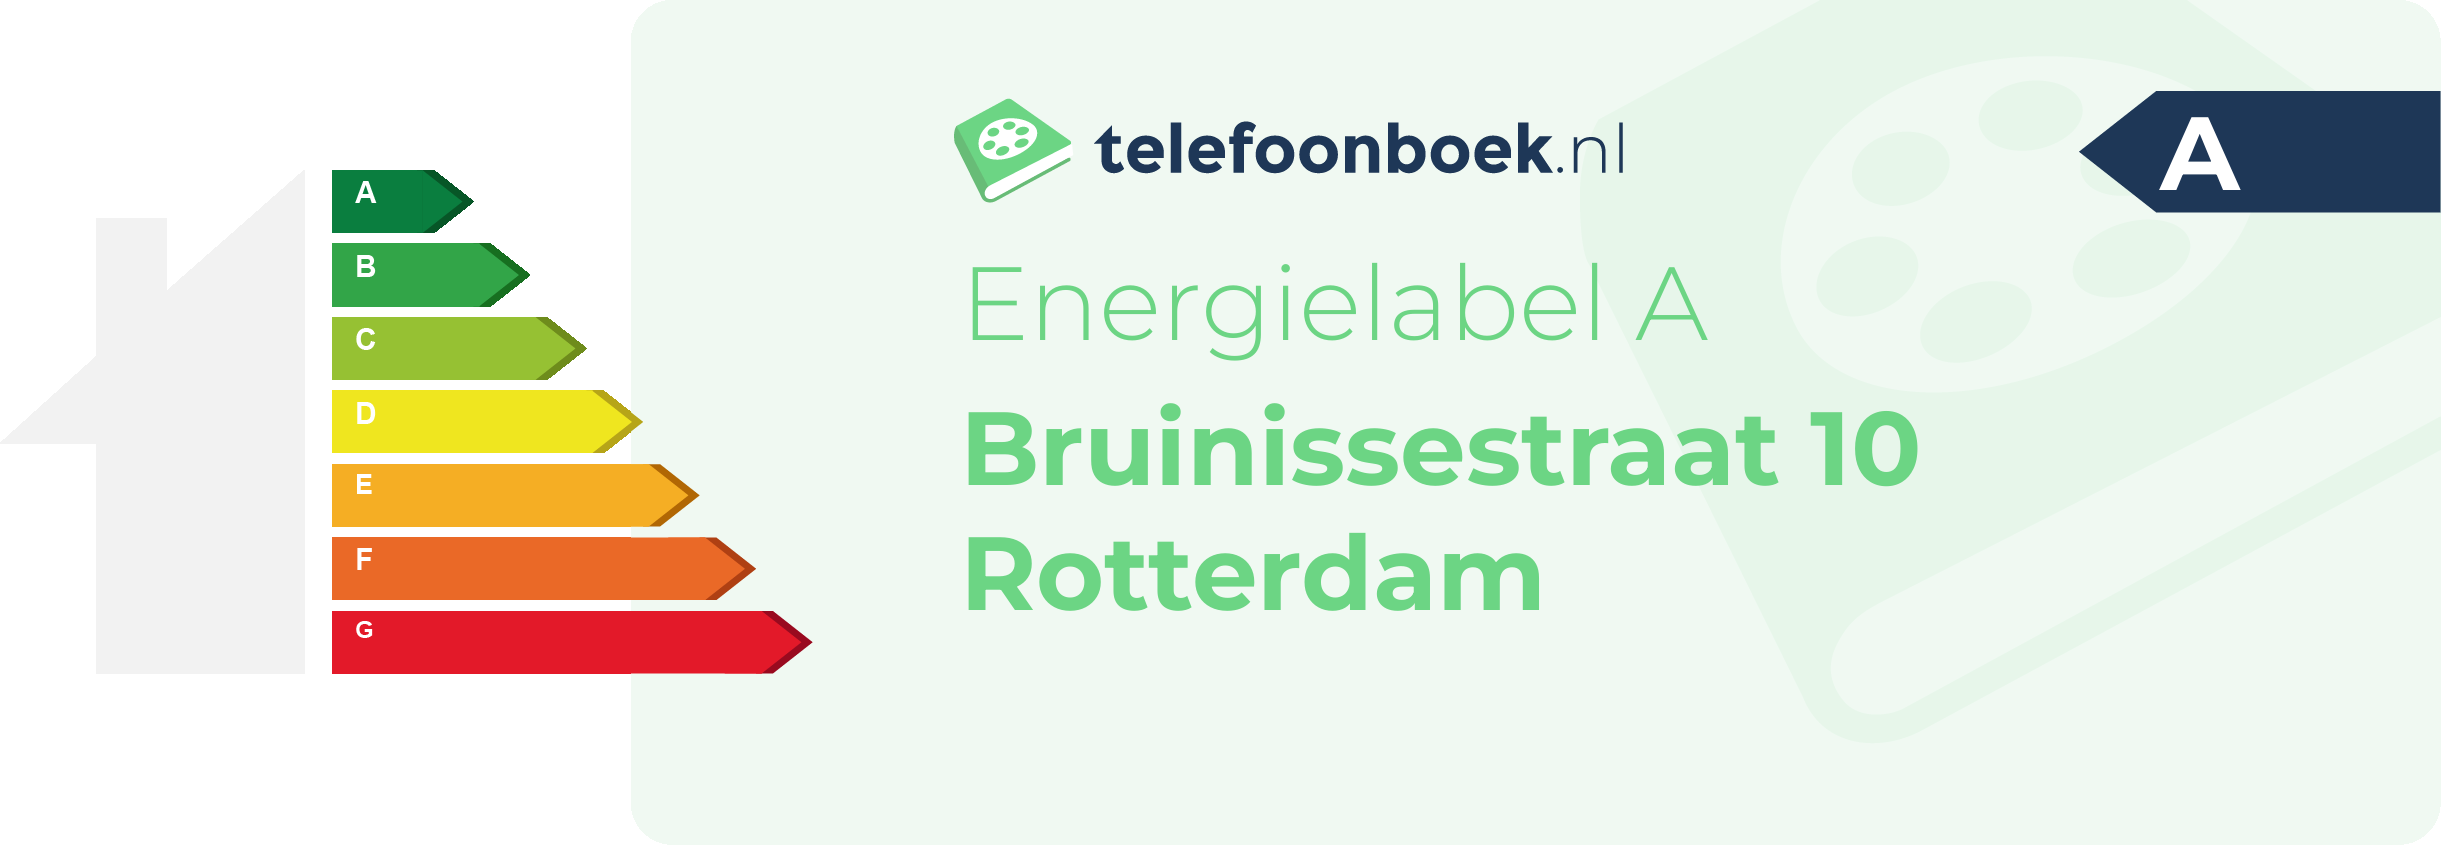 Energielabel Bruinissestraat 10 Rotterdam